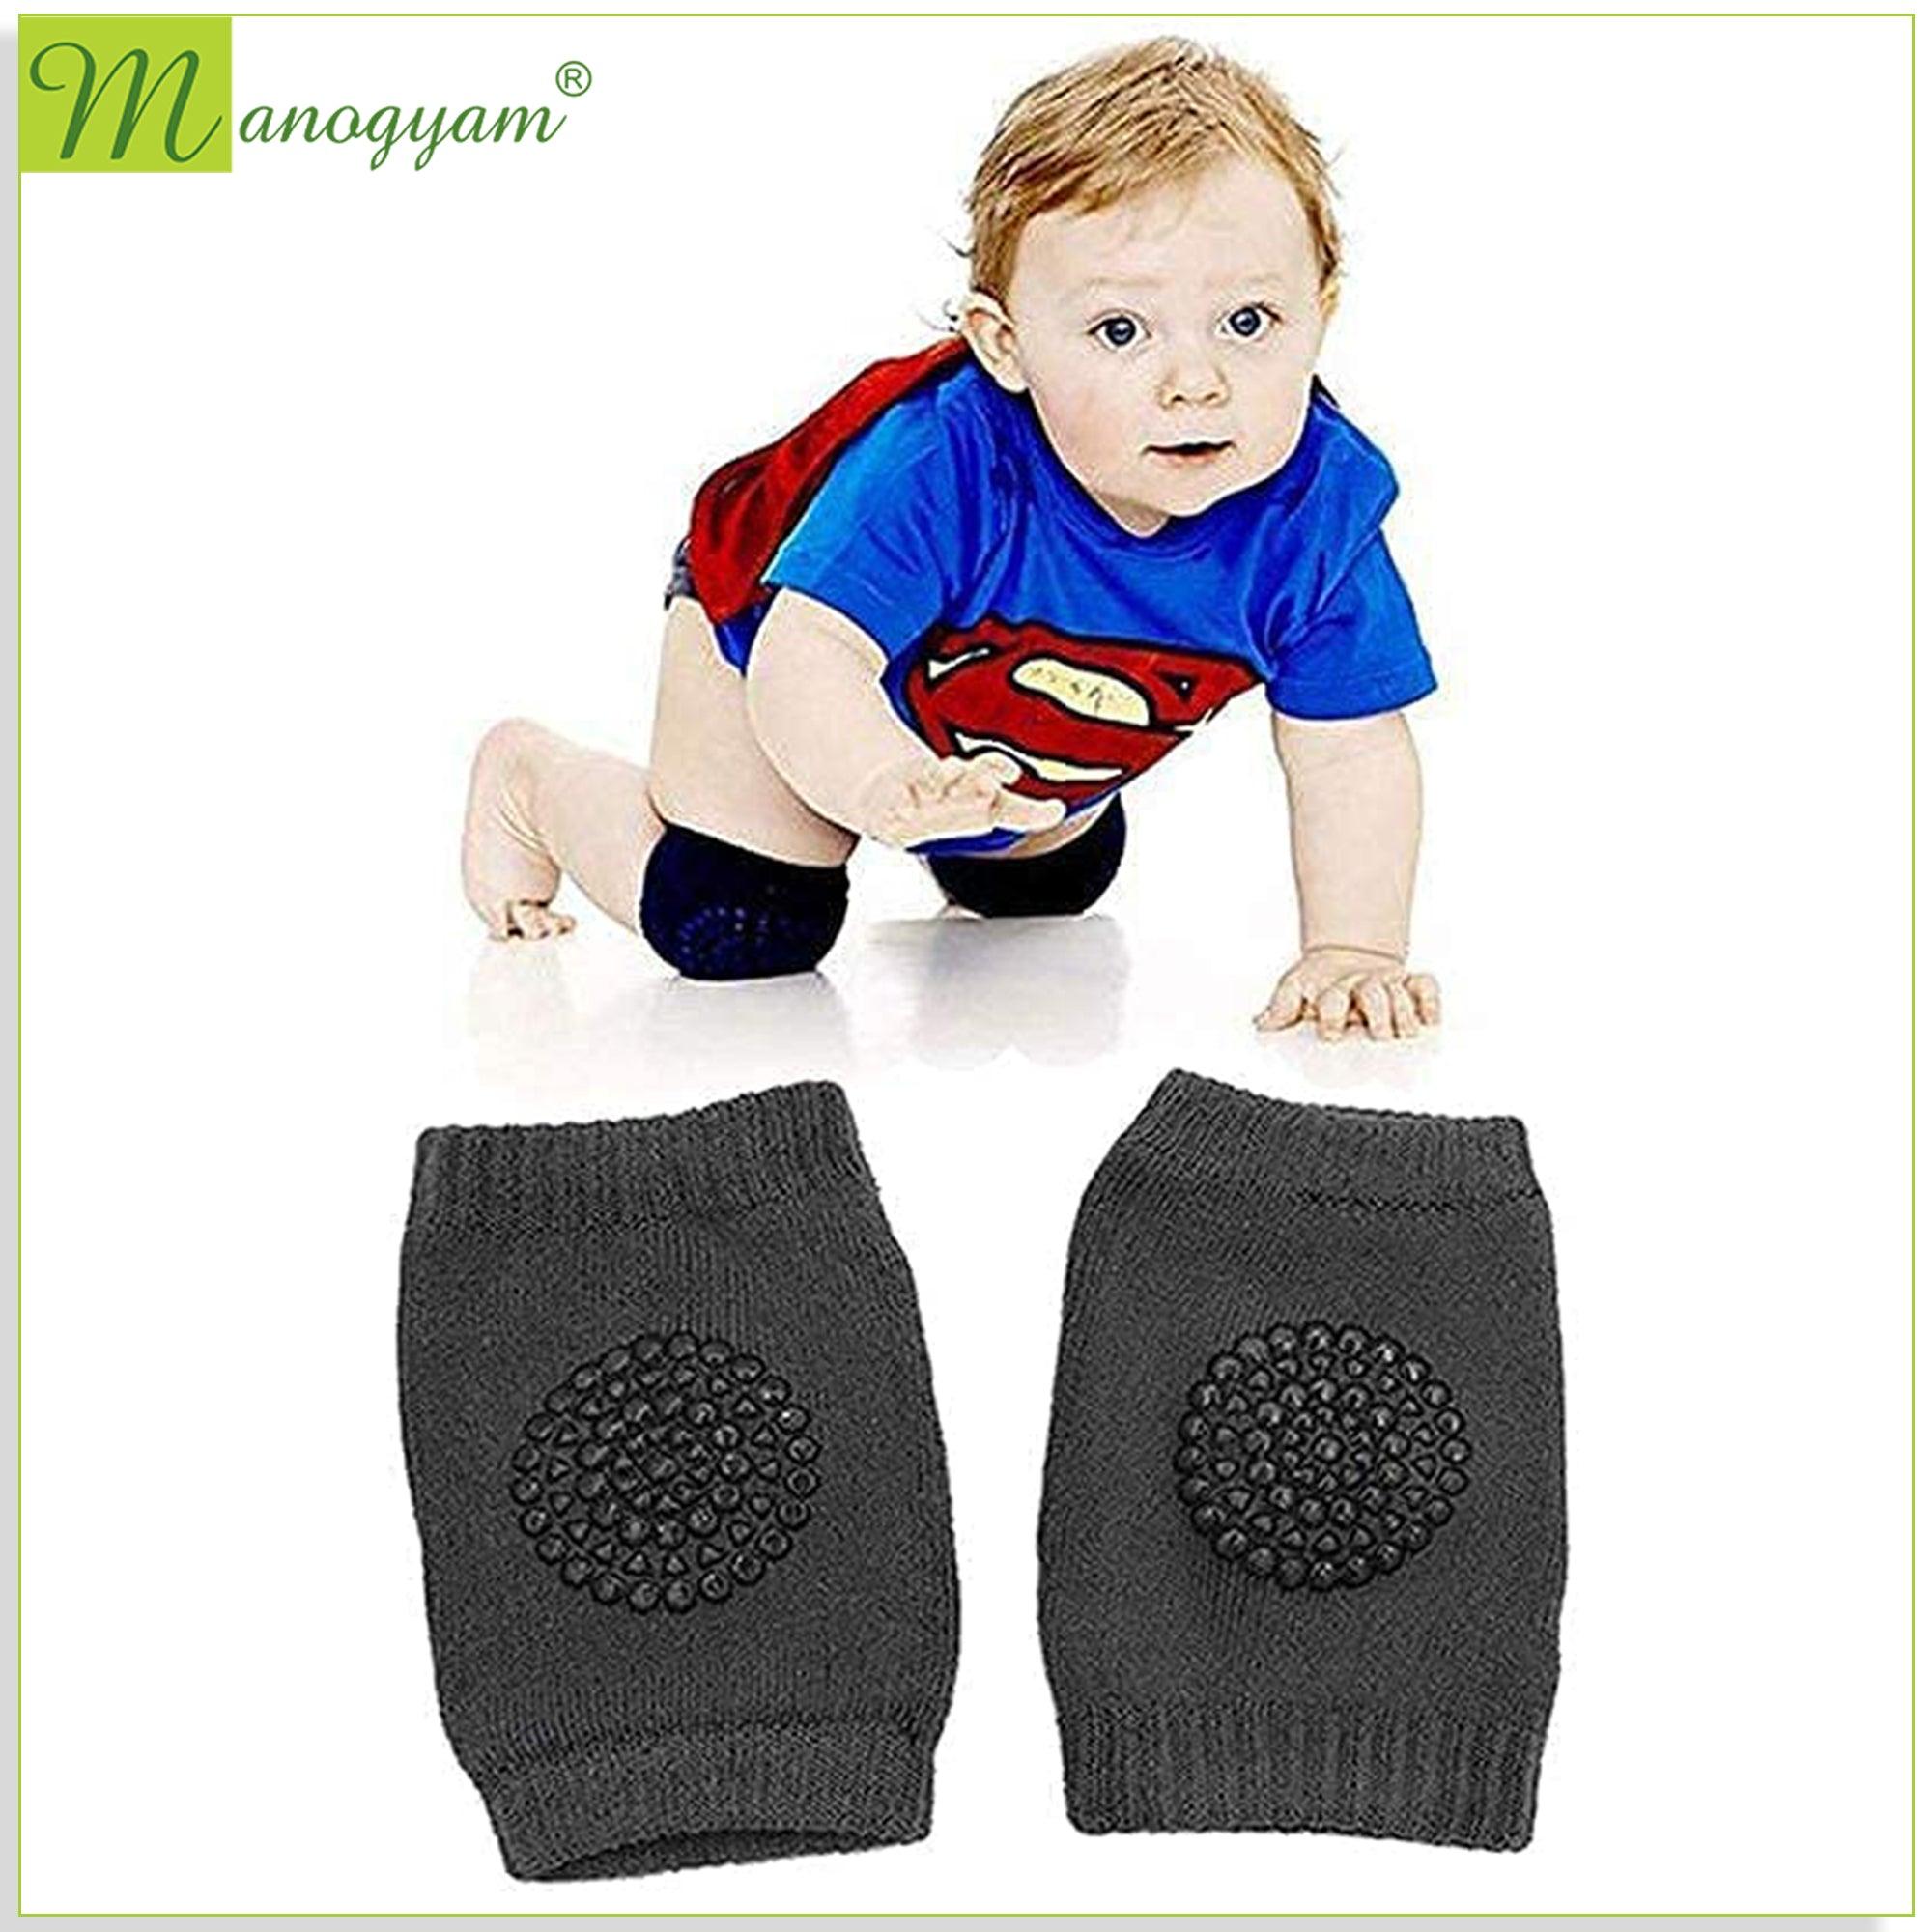 Manogyam Comfortable Baby Knee Pads for Crawling